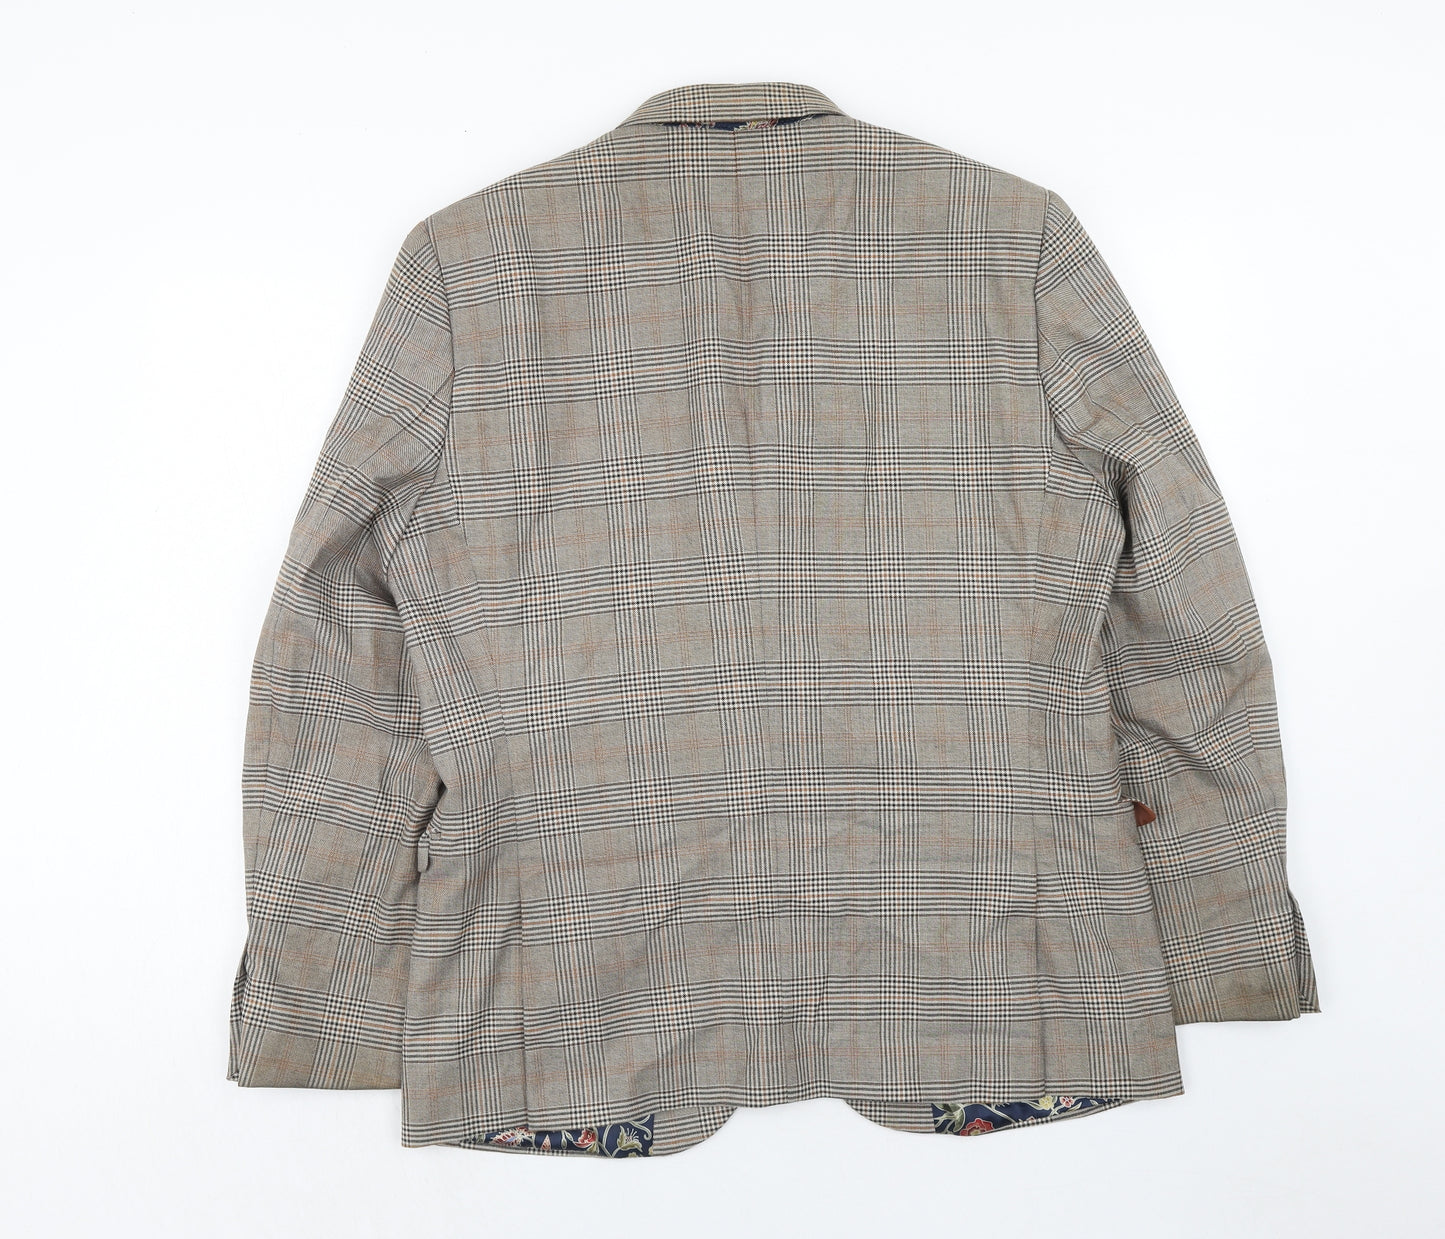 NEXT Mens Brown Plaid Polyester Jacket Blazer Size 44 Regular